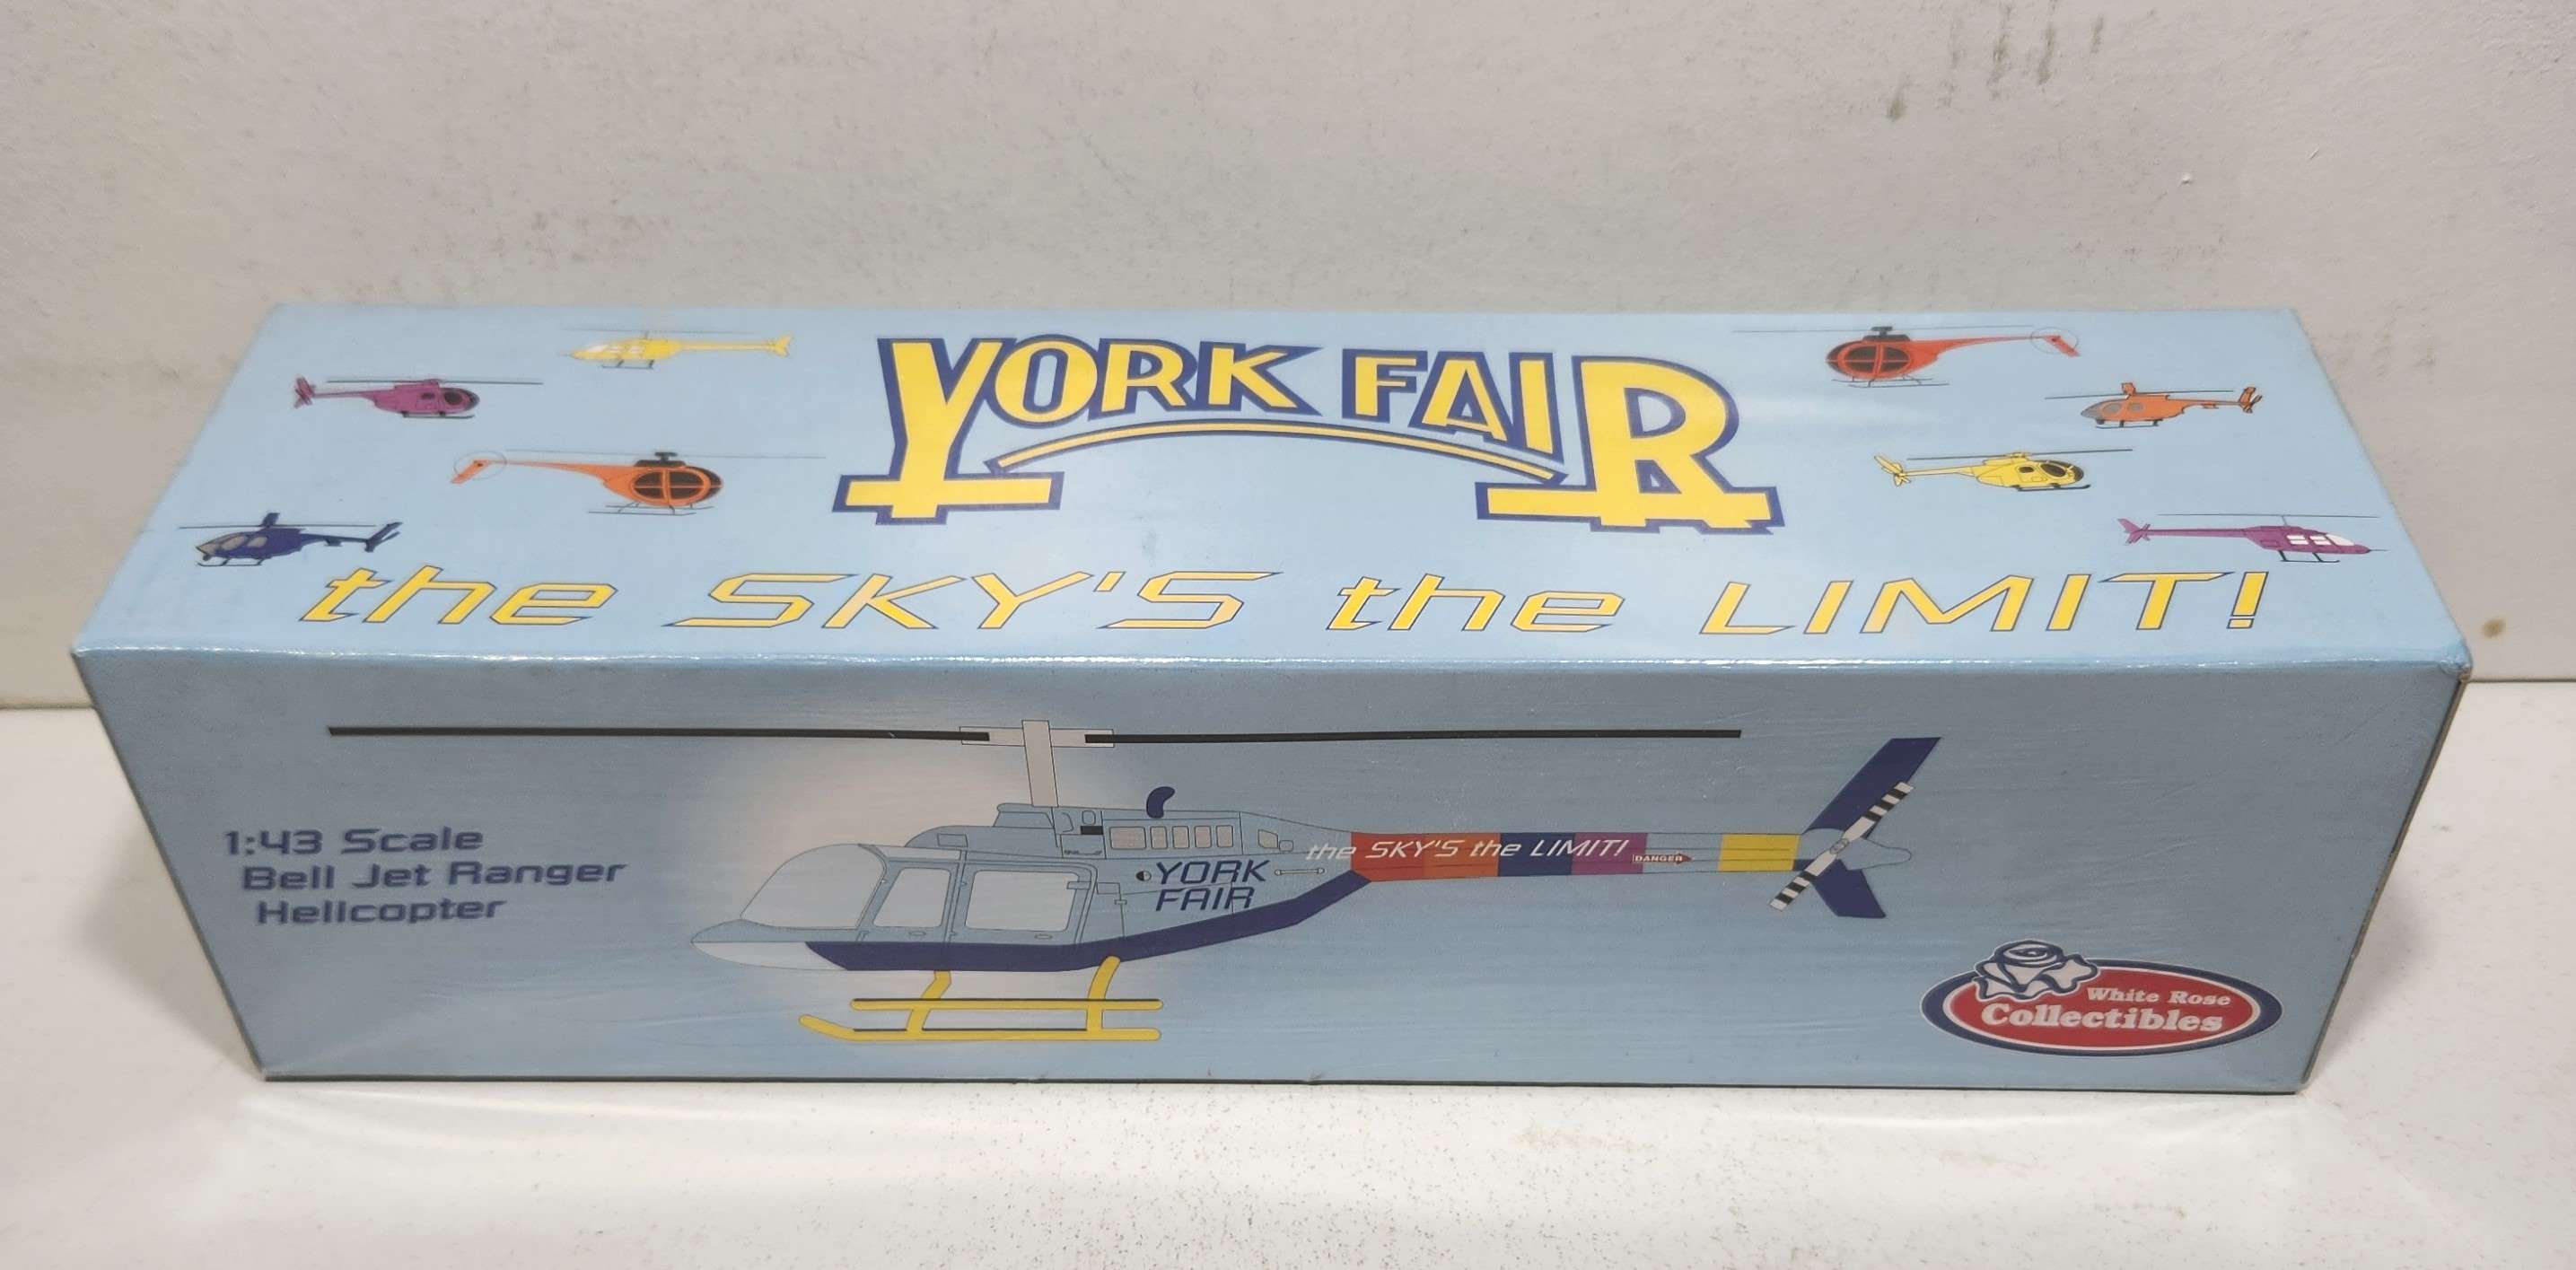 2001 York Fair 1/43rd Helicopter